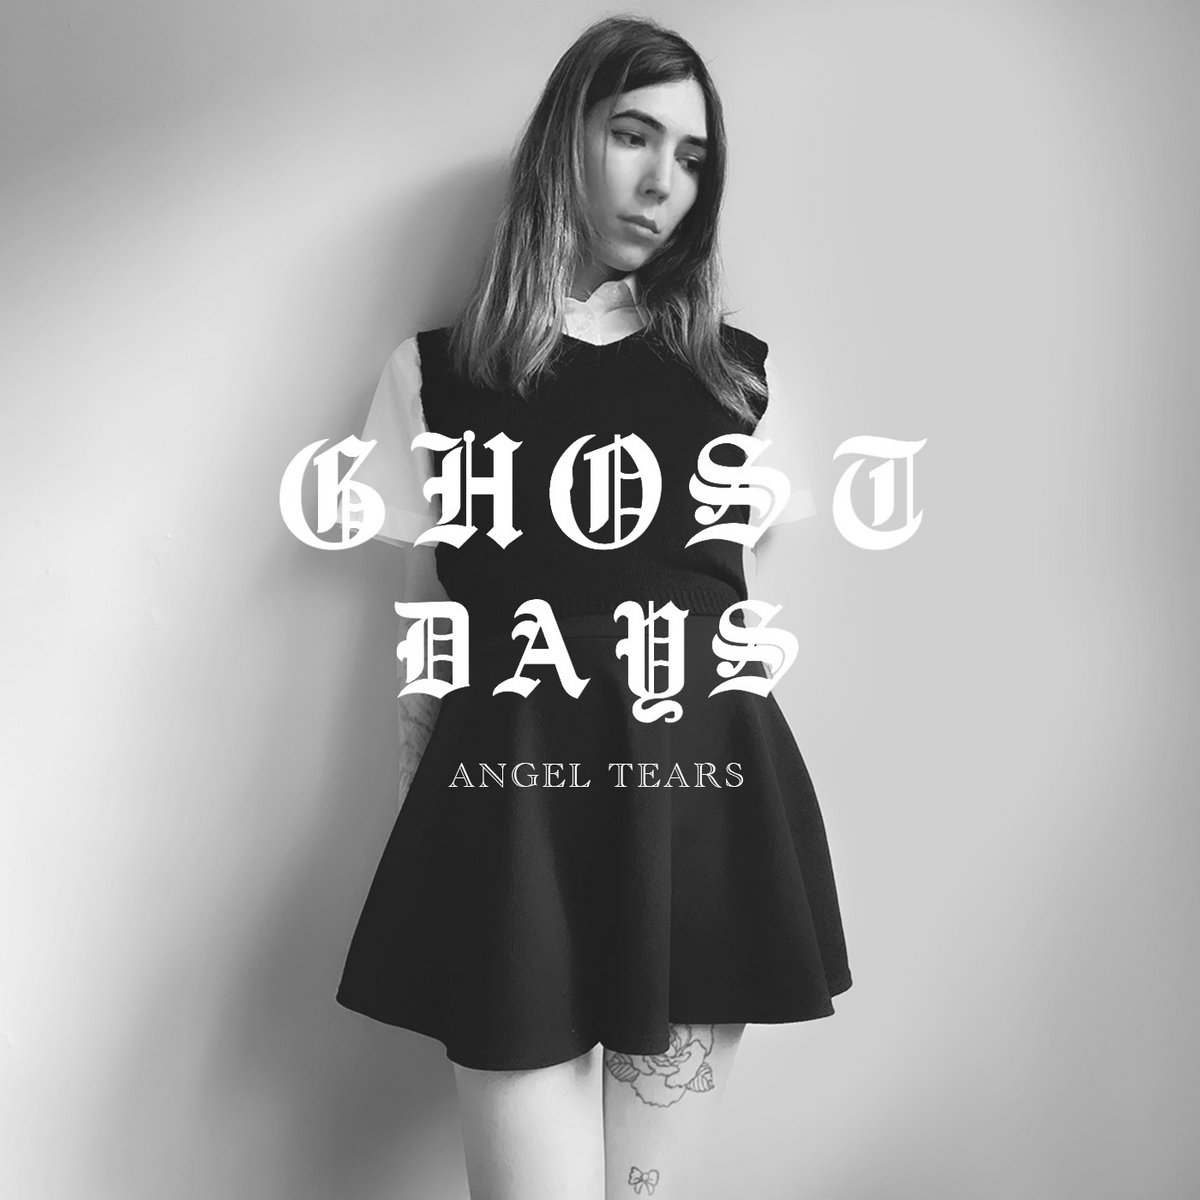 Ghost Days “Heart Apart”